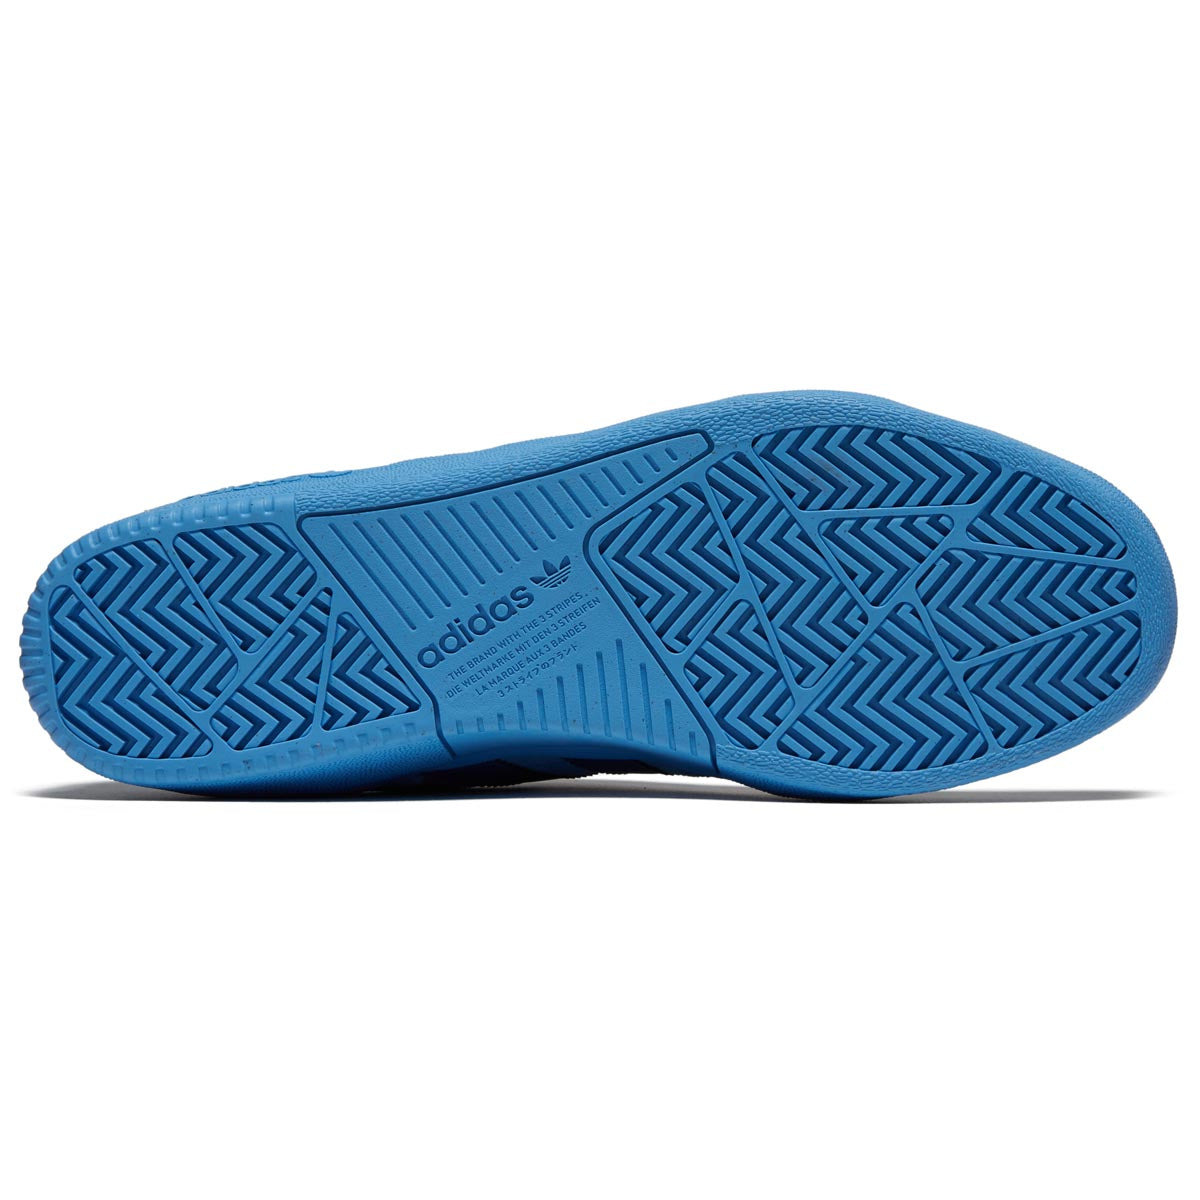 Adidas Tyshawn Low Shoes - Blue Burst/Royal/Bluebird image 4